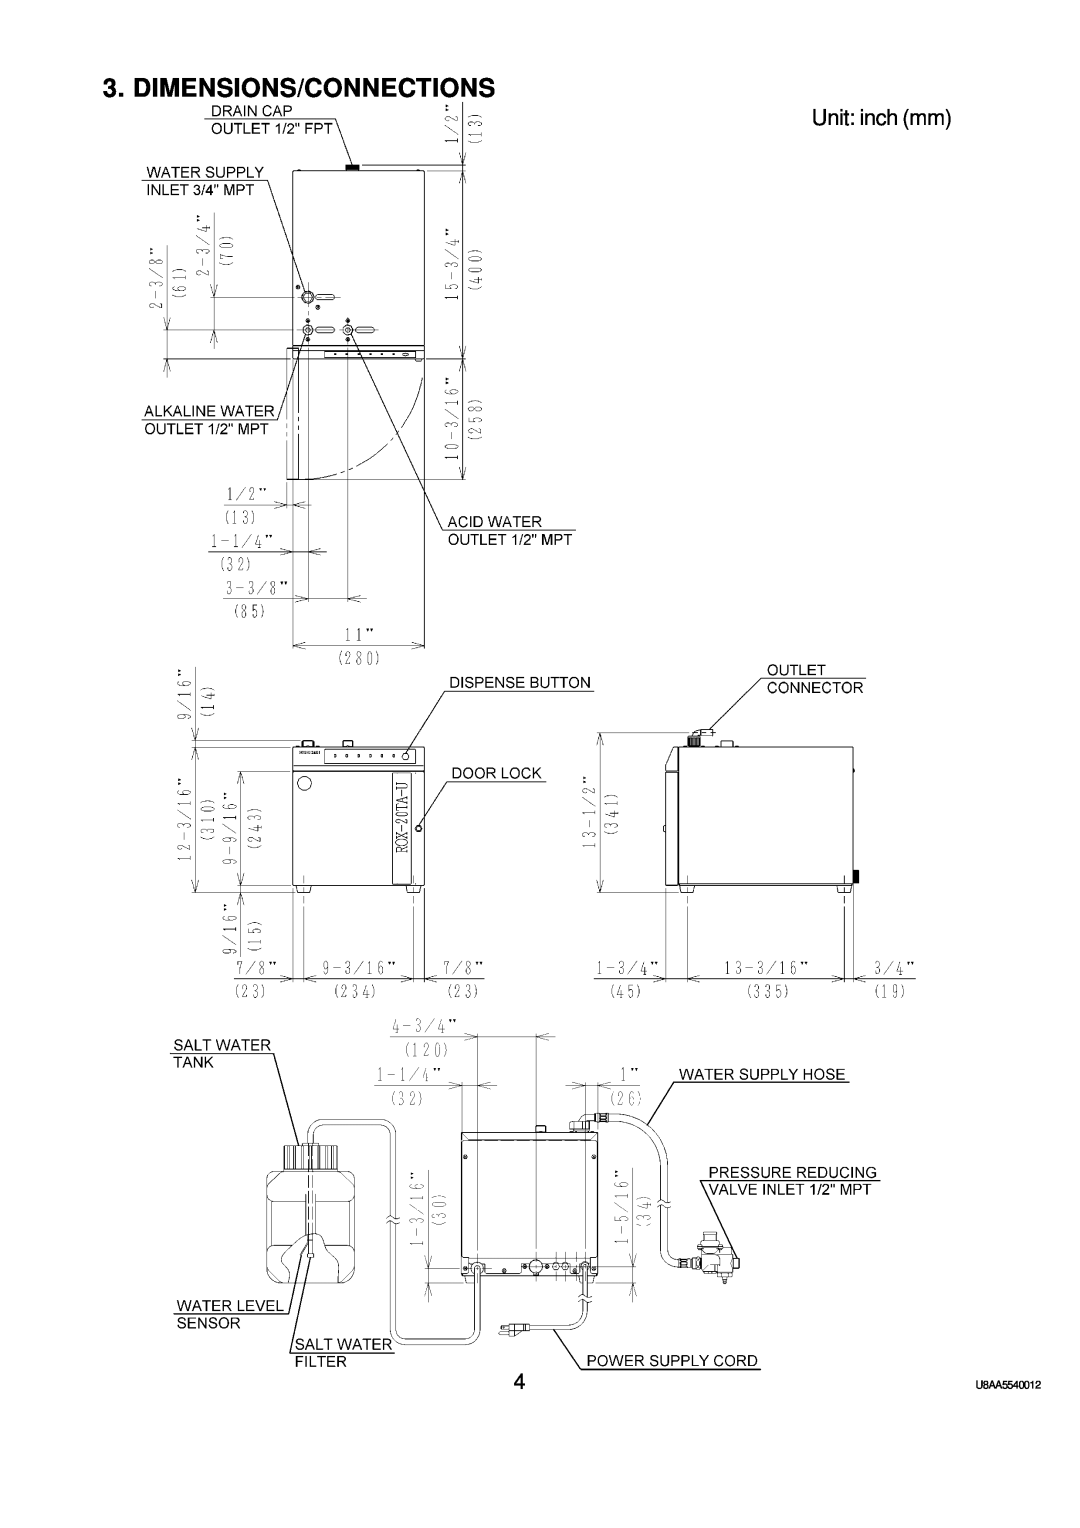 Hoshizaki ROX-20TA-U service manual Dimensions/Connections, Unit inch mm, U8AA5540012 